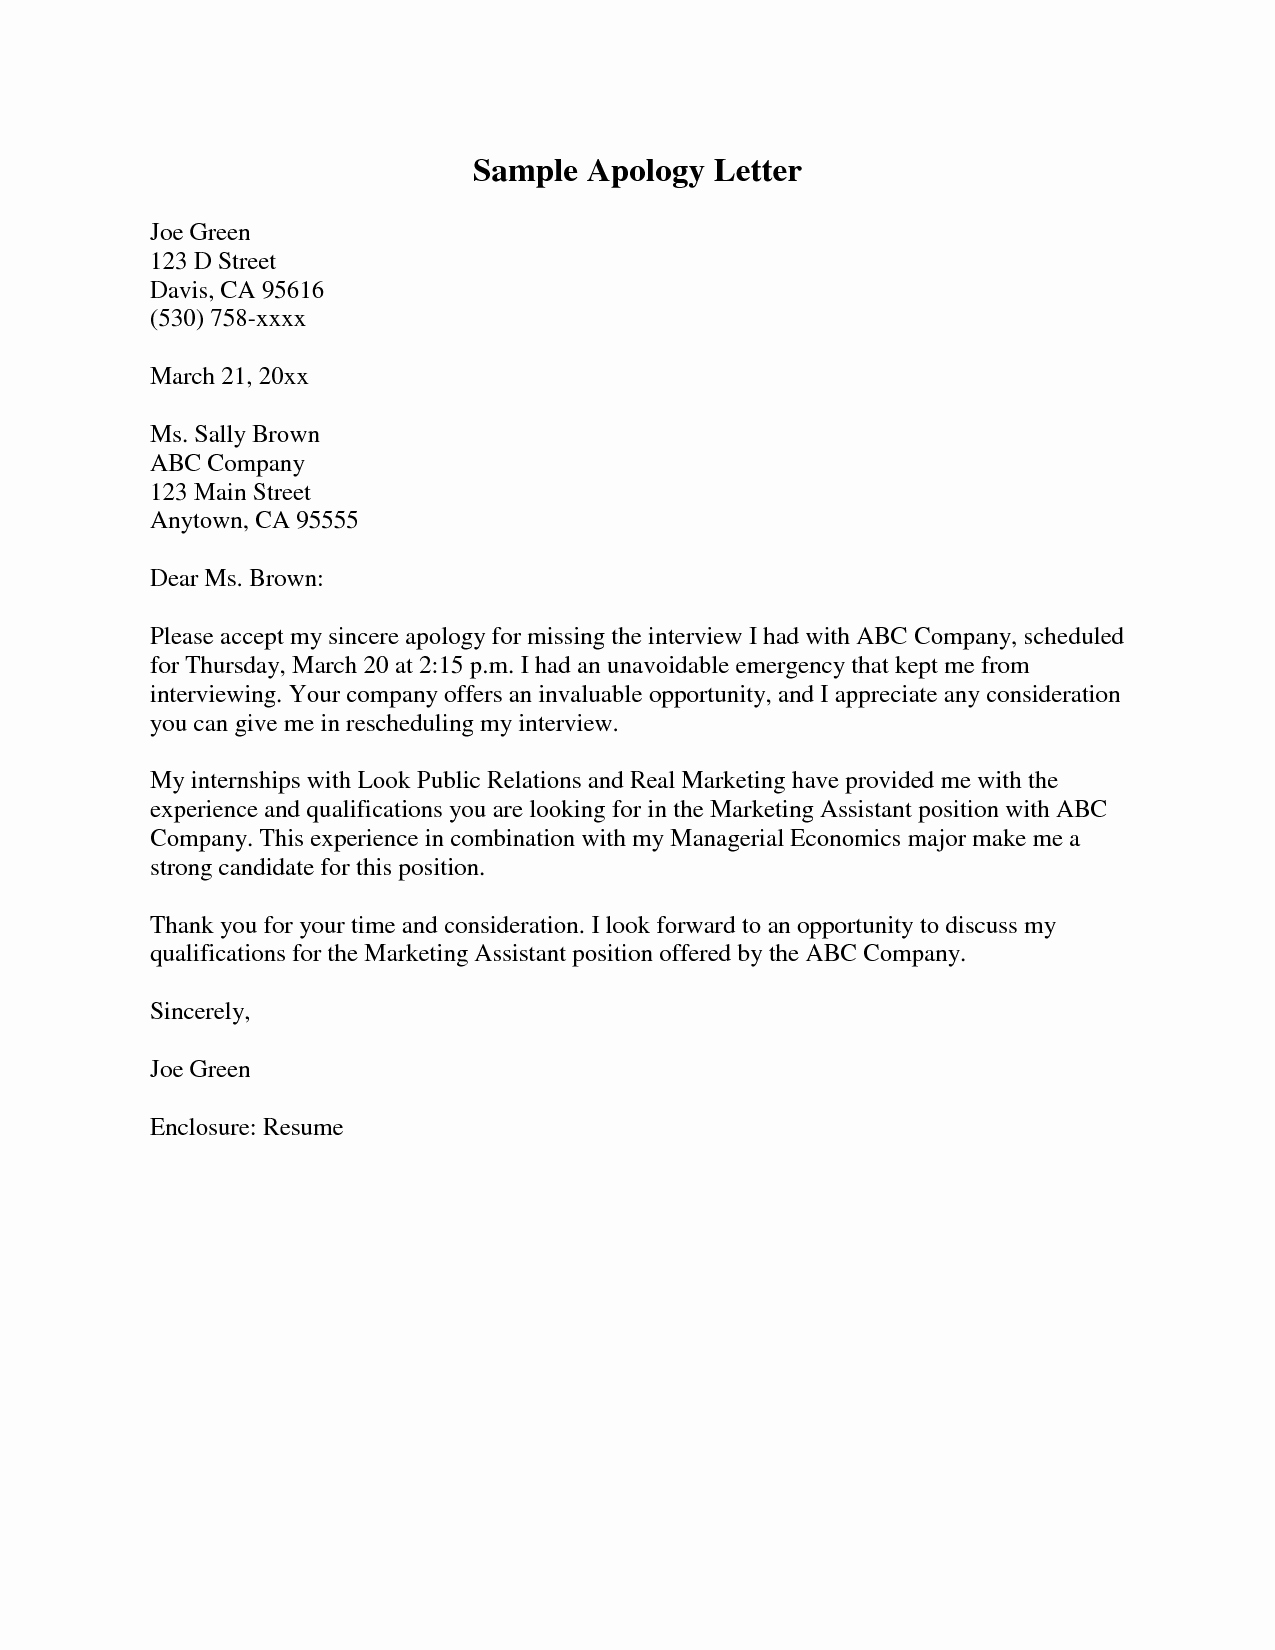 Sample Of Business Letter Lovely How to Write An Apology Letter to A Teacher Sampleletter